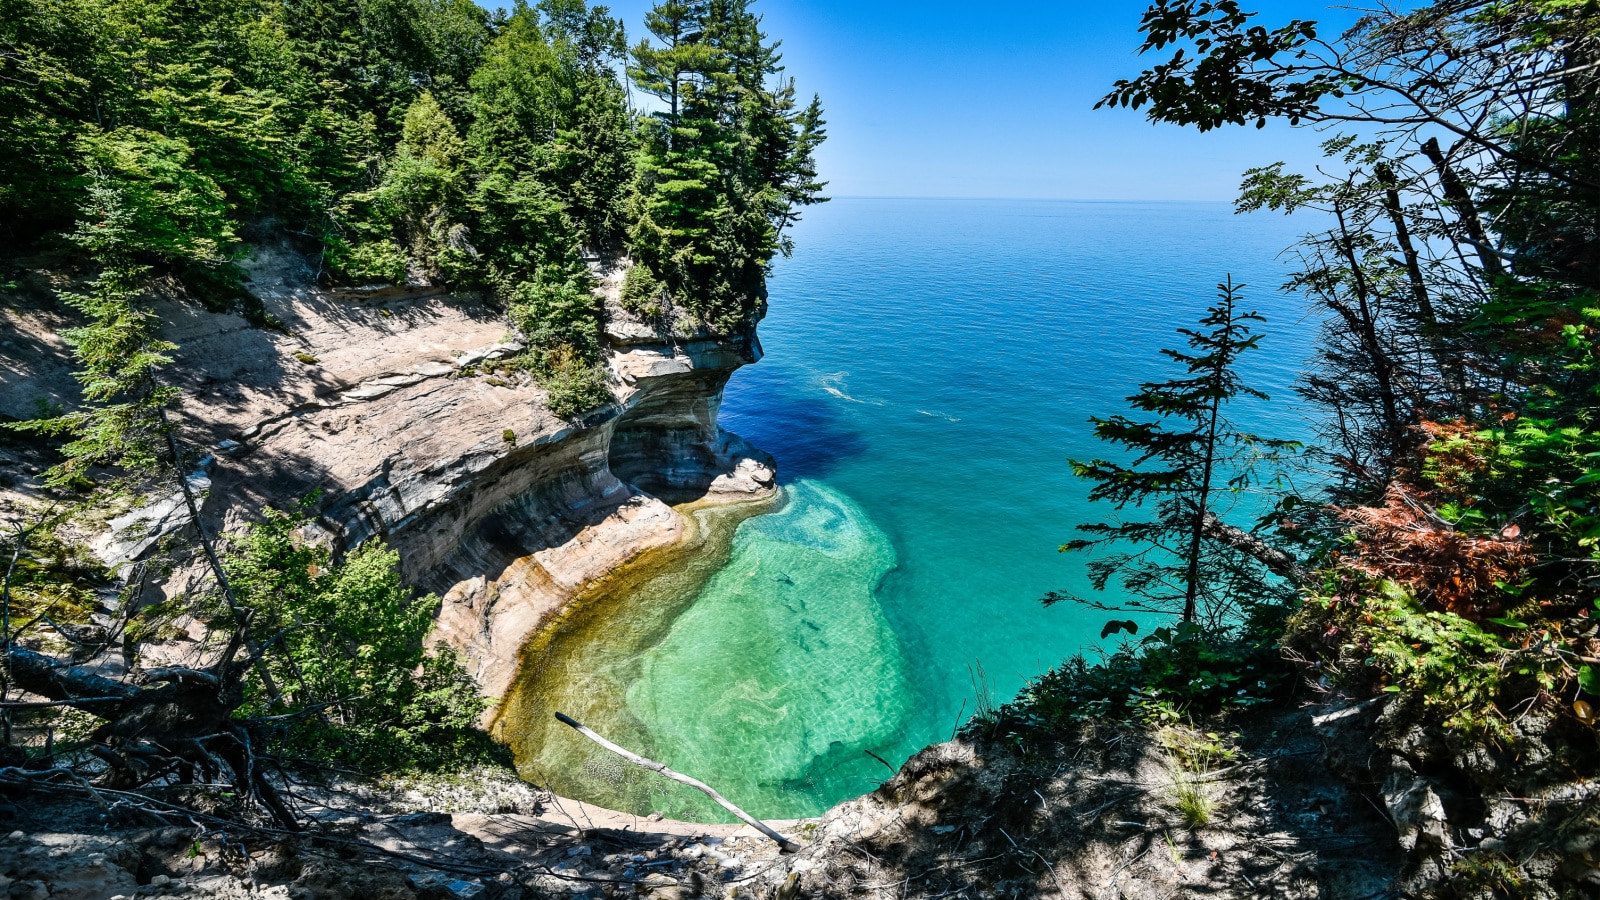 Lake Superior beach views from Michigan's upper peninsula